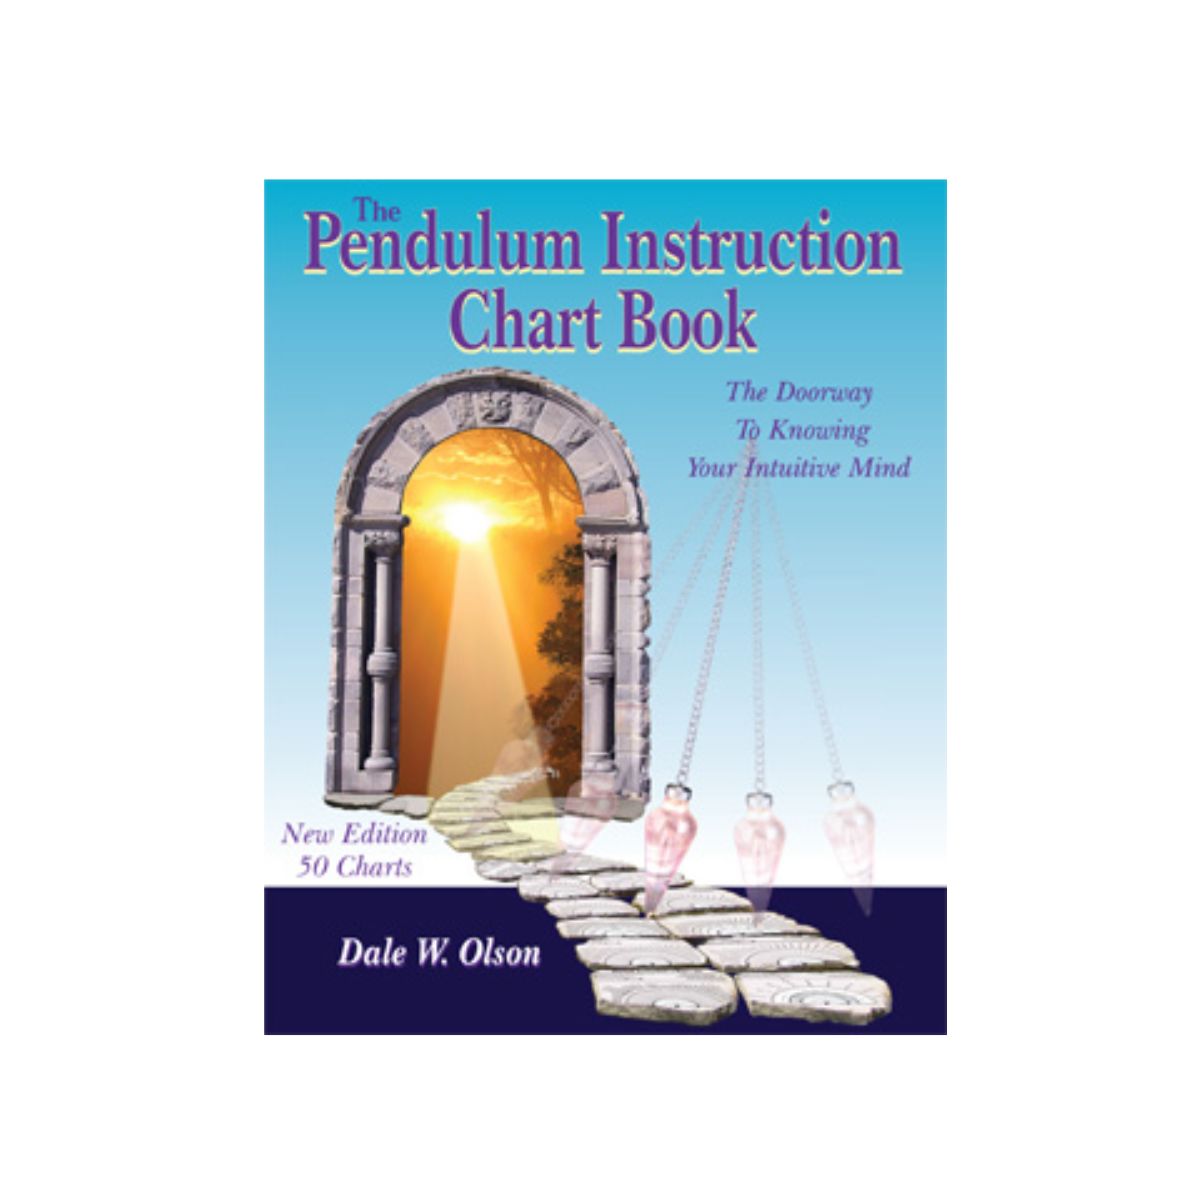 Pendulum Instruction Chart Book, The